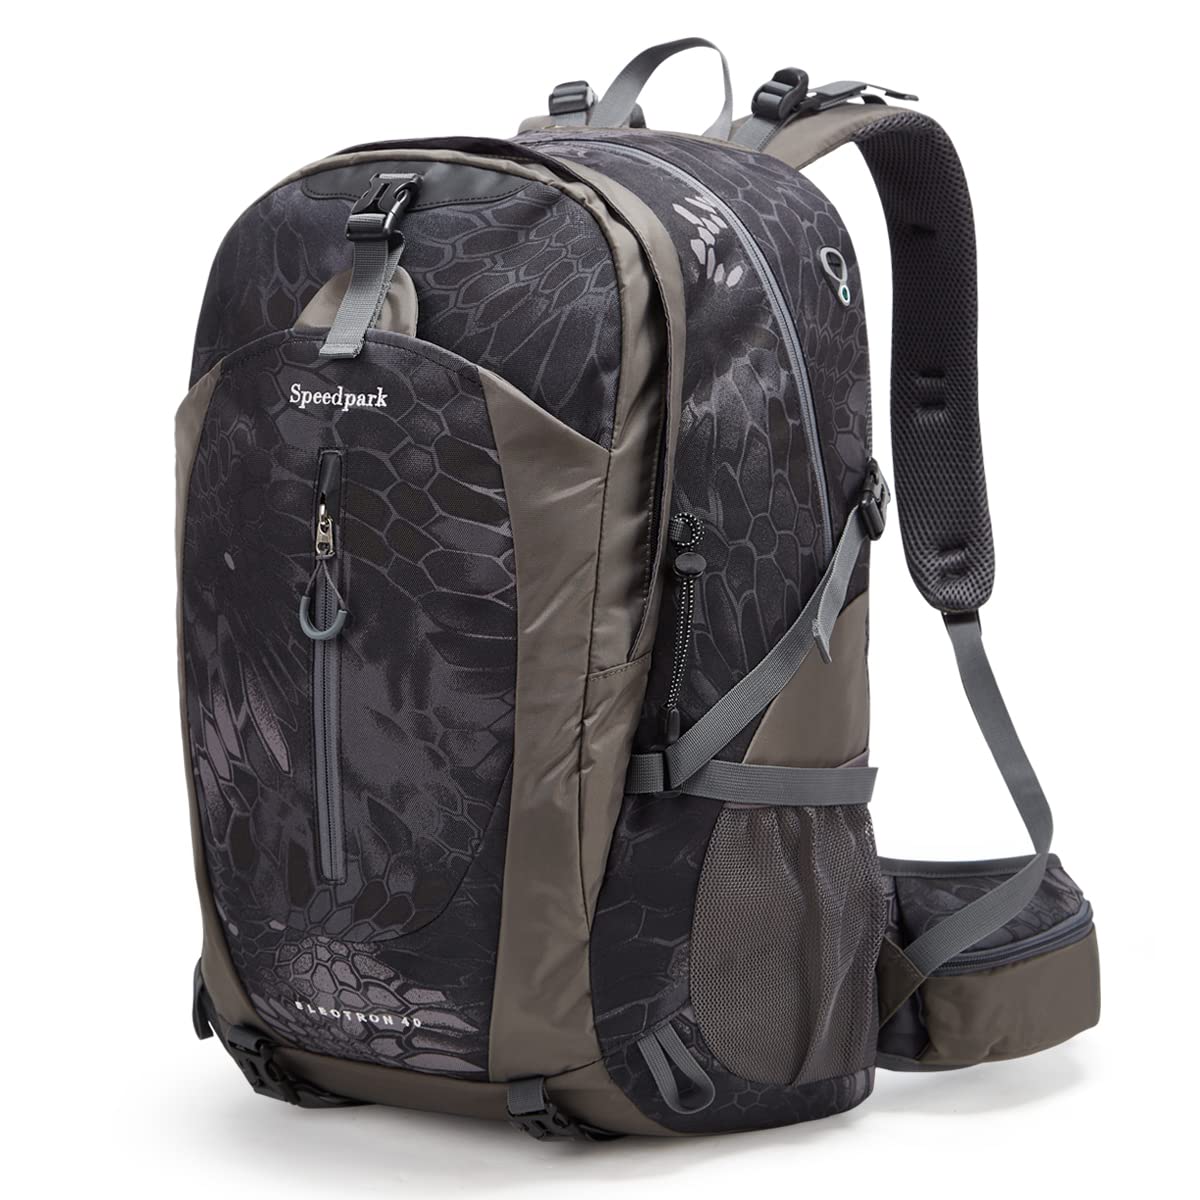 Hiking Backpack 40L Waterproof Lightweight Hiking Daypack with Rain Cover, Outdoor Trekking Travel Backpacks for Men Women